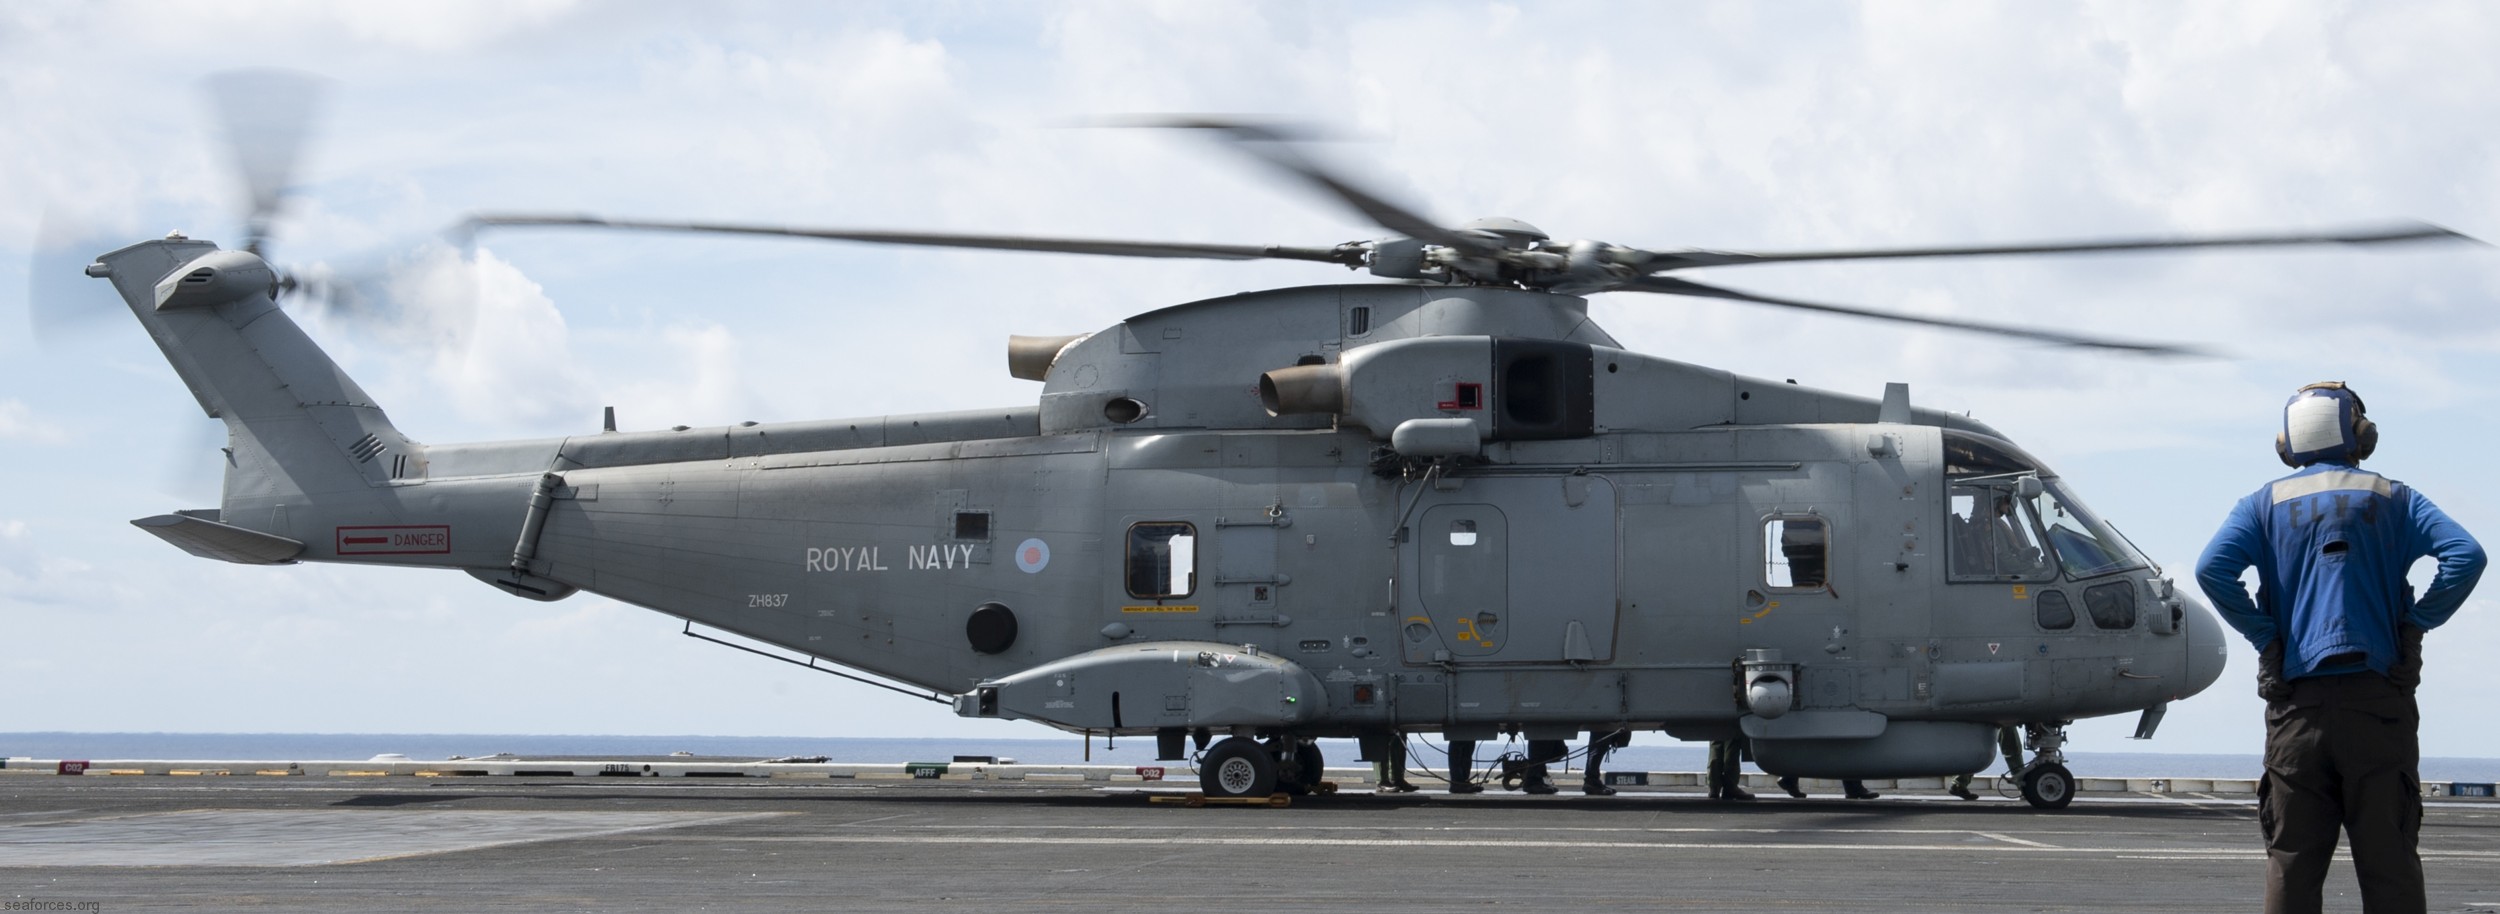 merlin hm2 helicopter royal navy agusta westland aw101 leonardo naval air squadron nas rnas culdrose 44